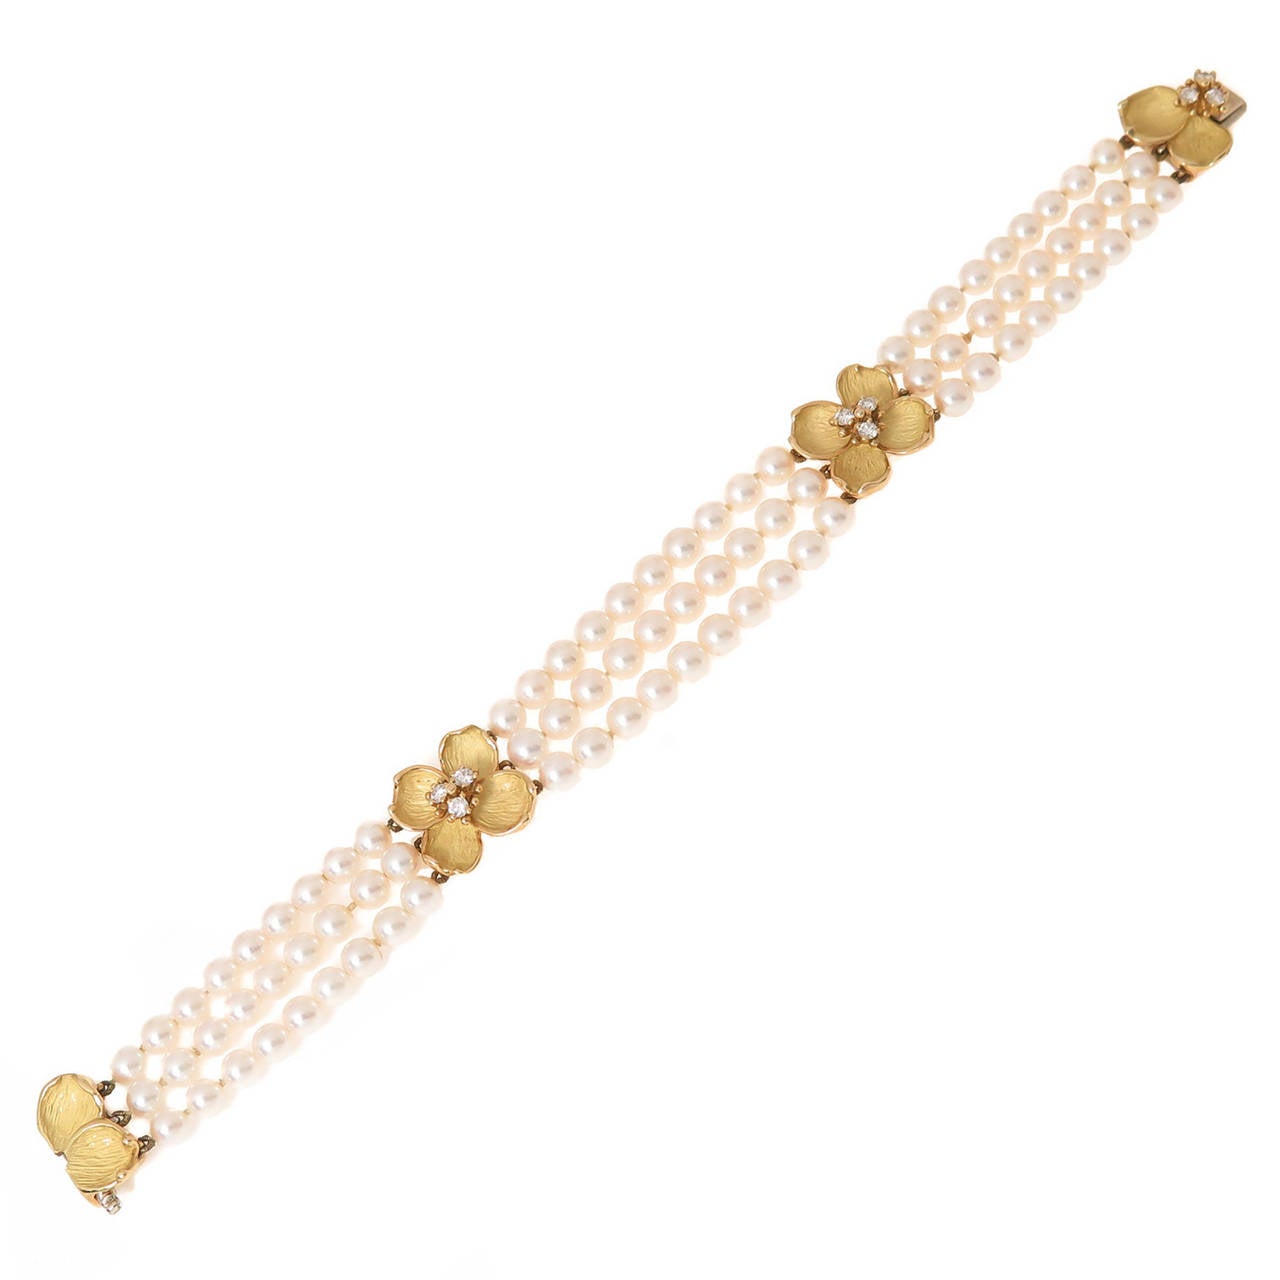 Gold 'Dogwood' Flower Bracelet, Tiffany and Co. Beekman New York